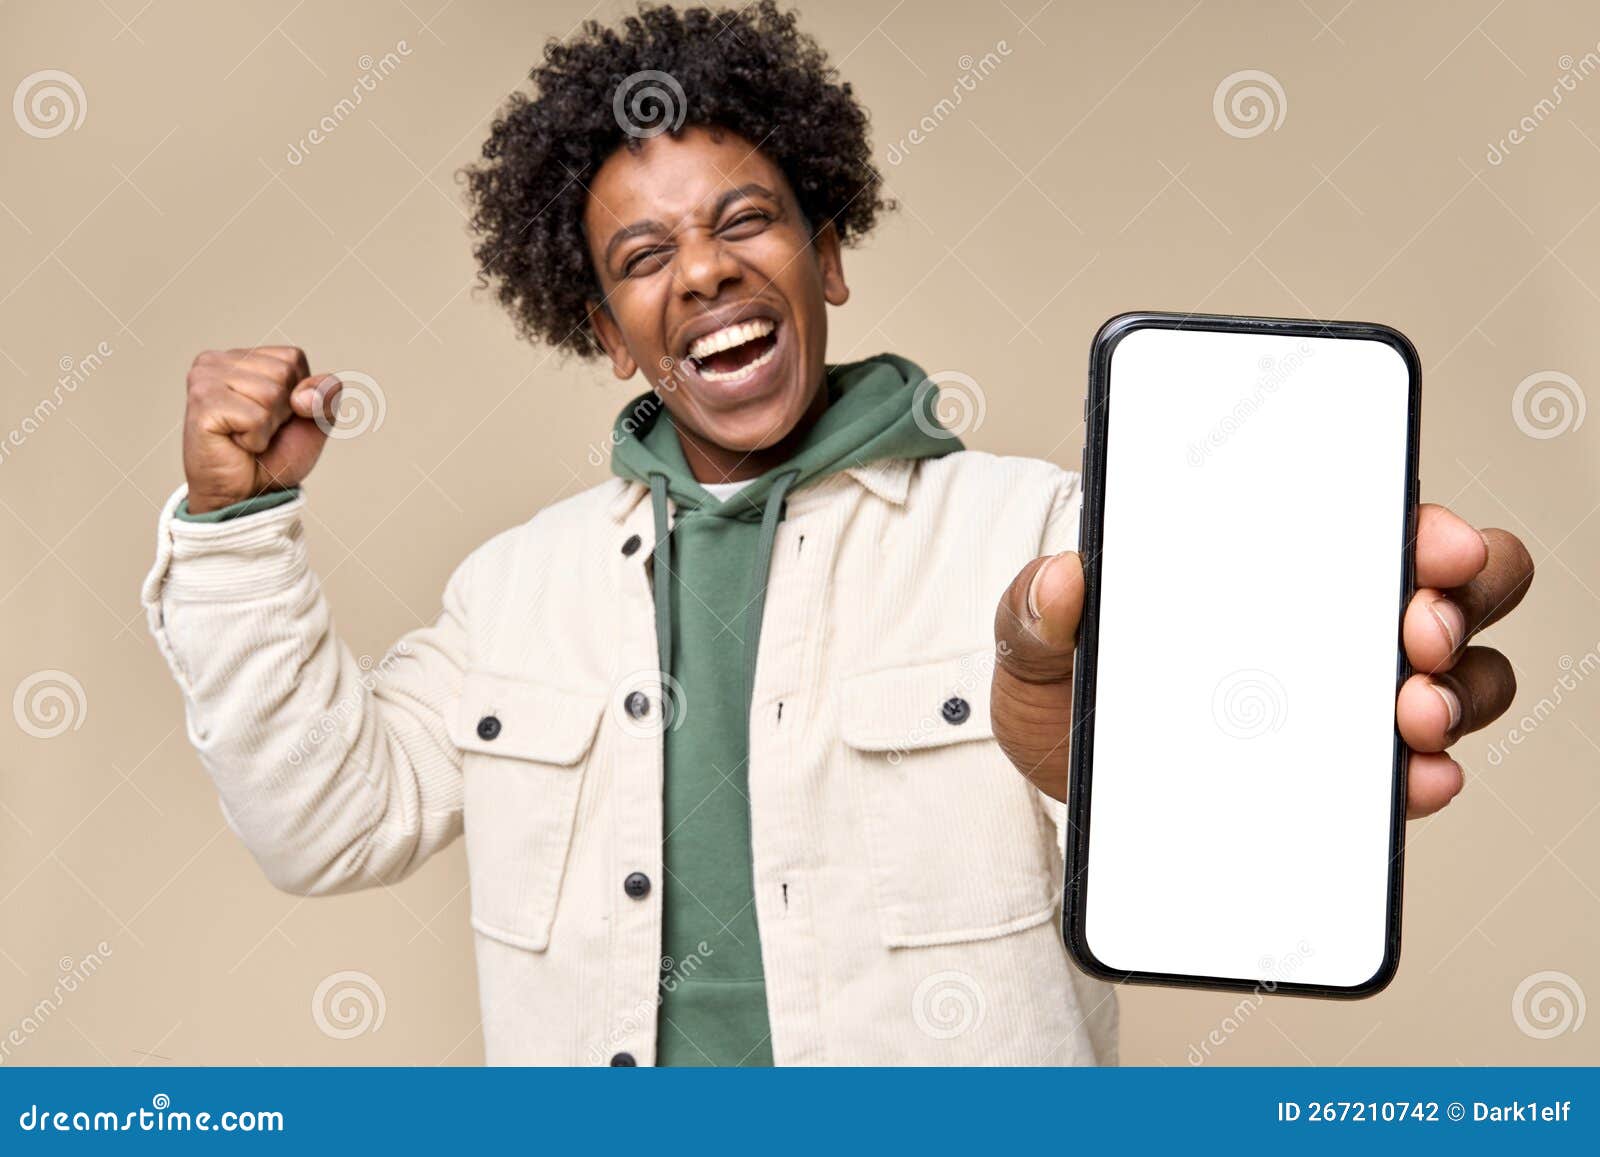 happy african american winner showing big mock up mobile phone screen.